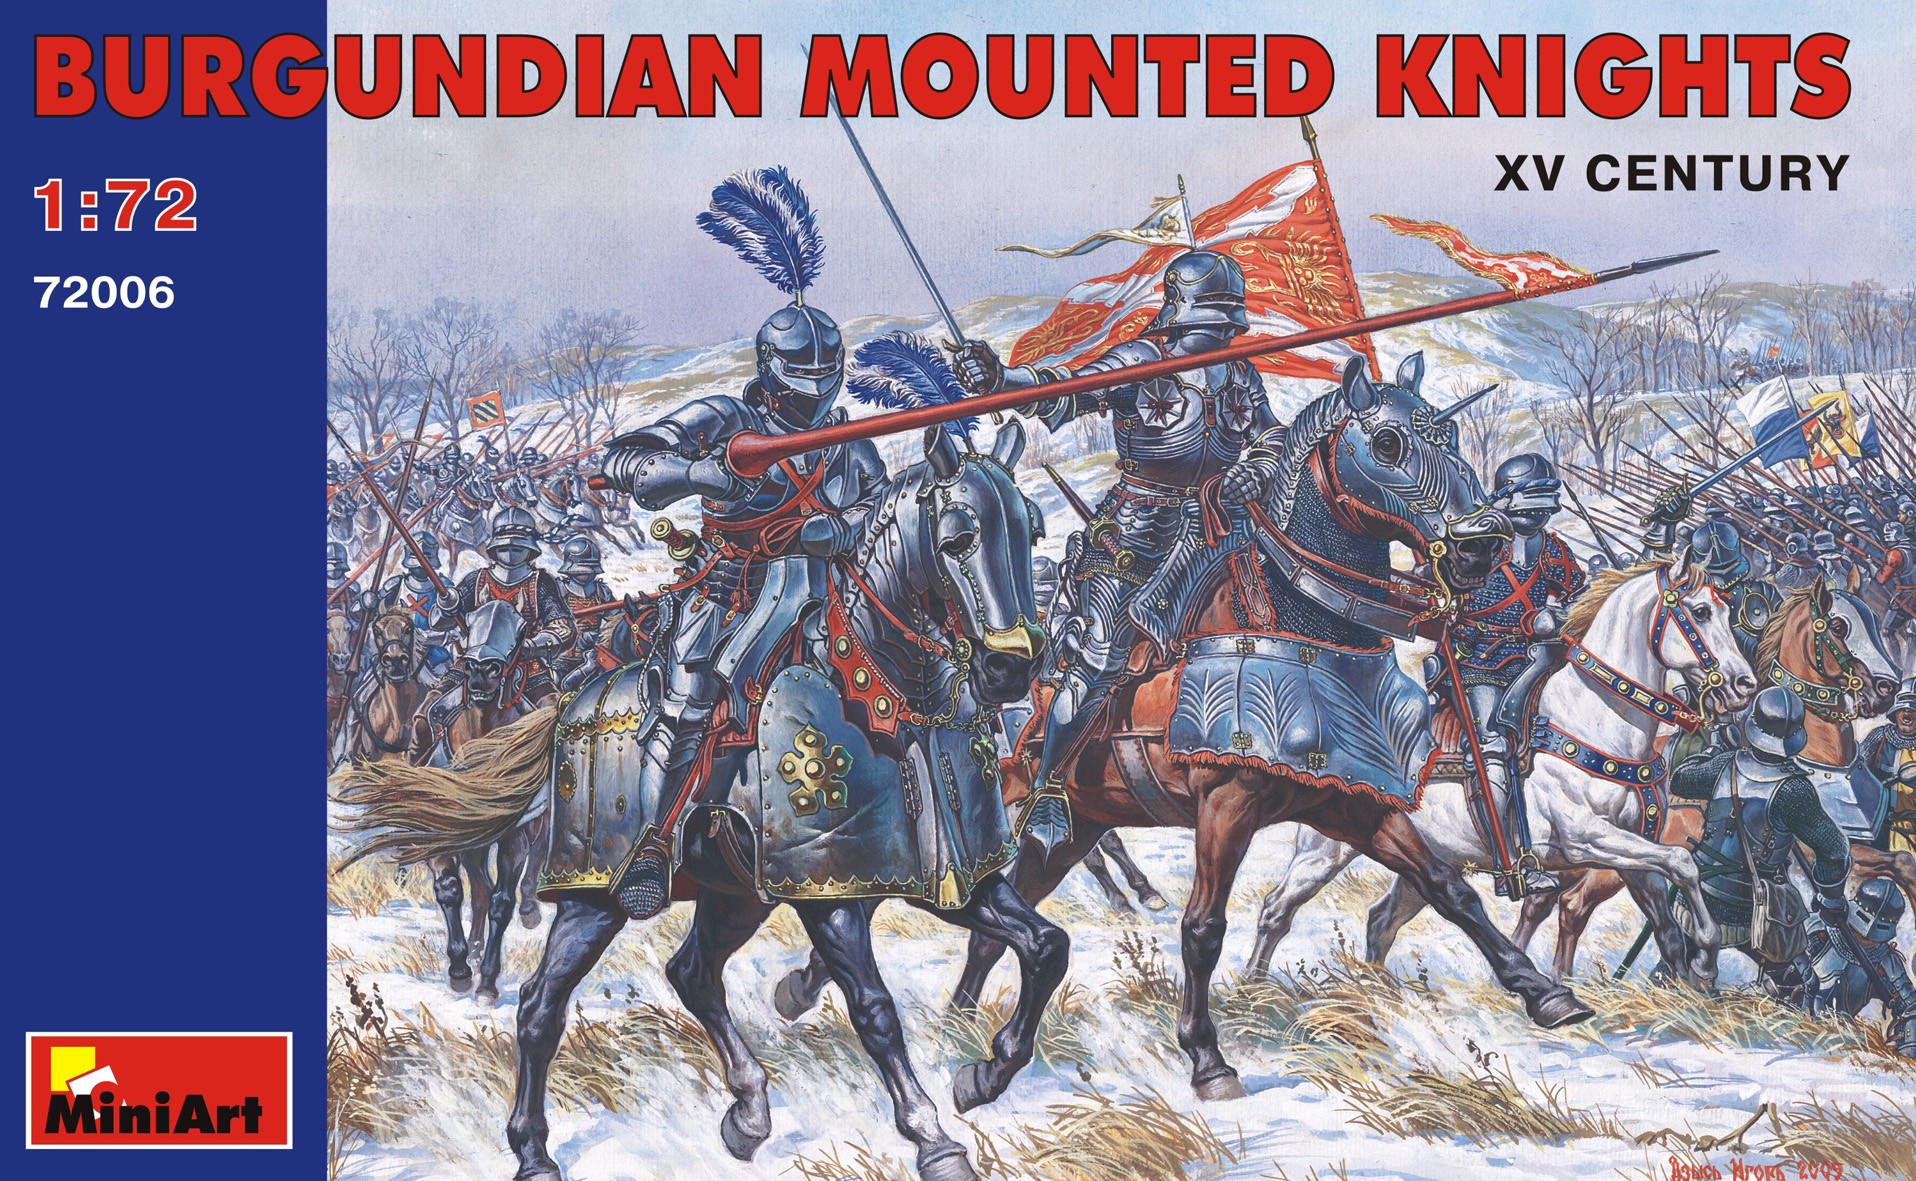 Burgundian Mounted knights - XV Century by MiniArt